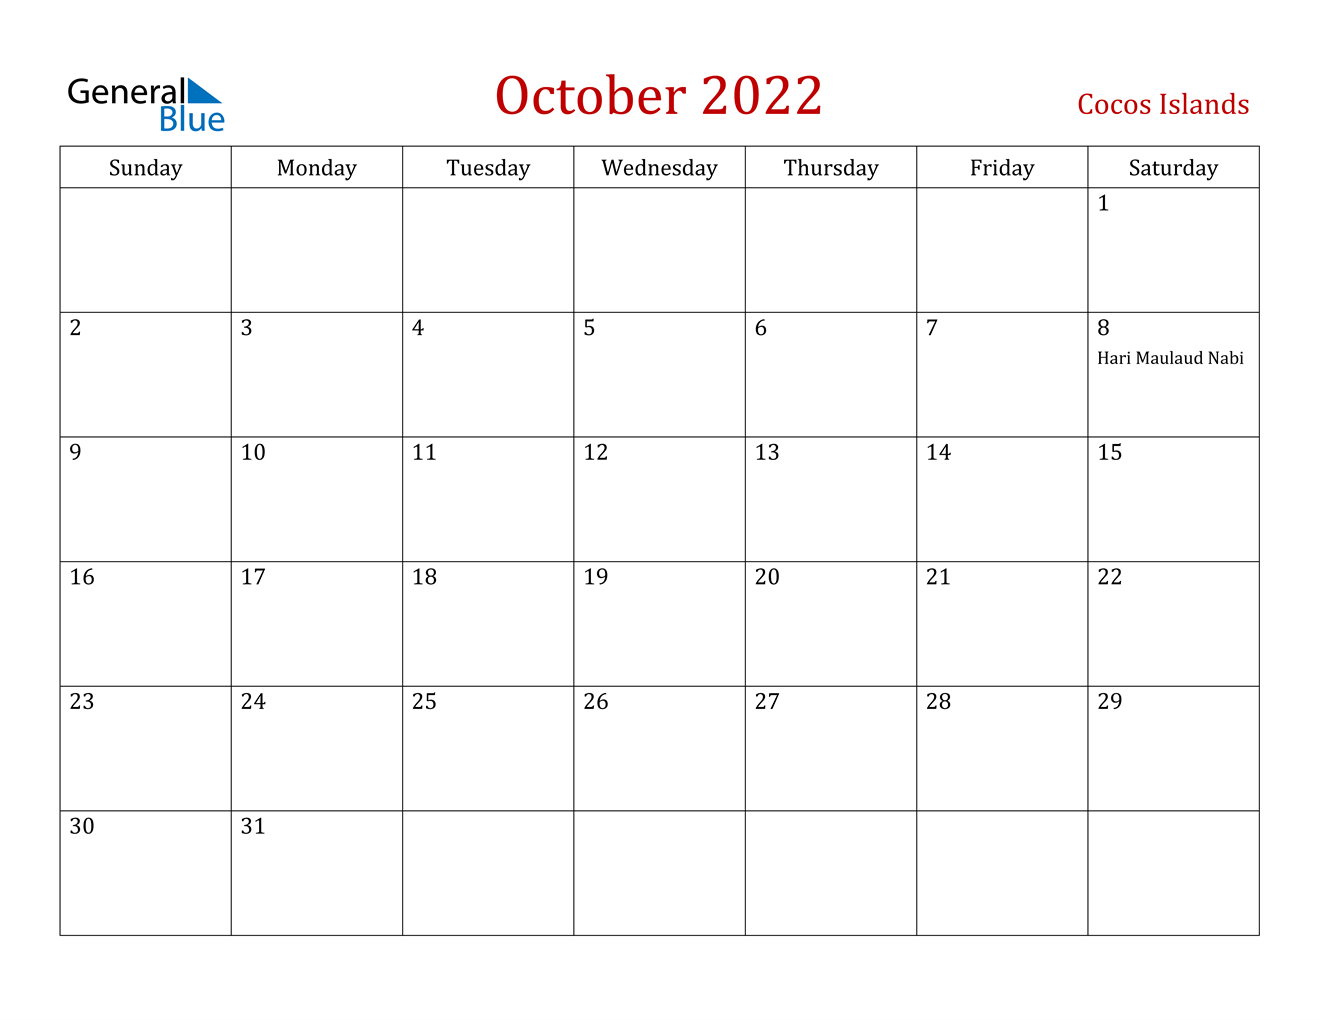 October 2022 Calendar - Cocos Islands